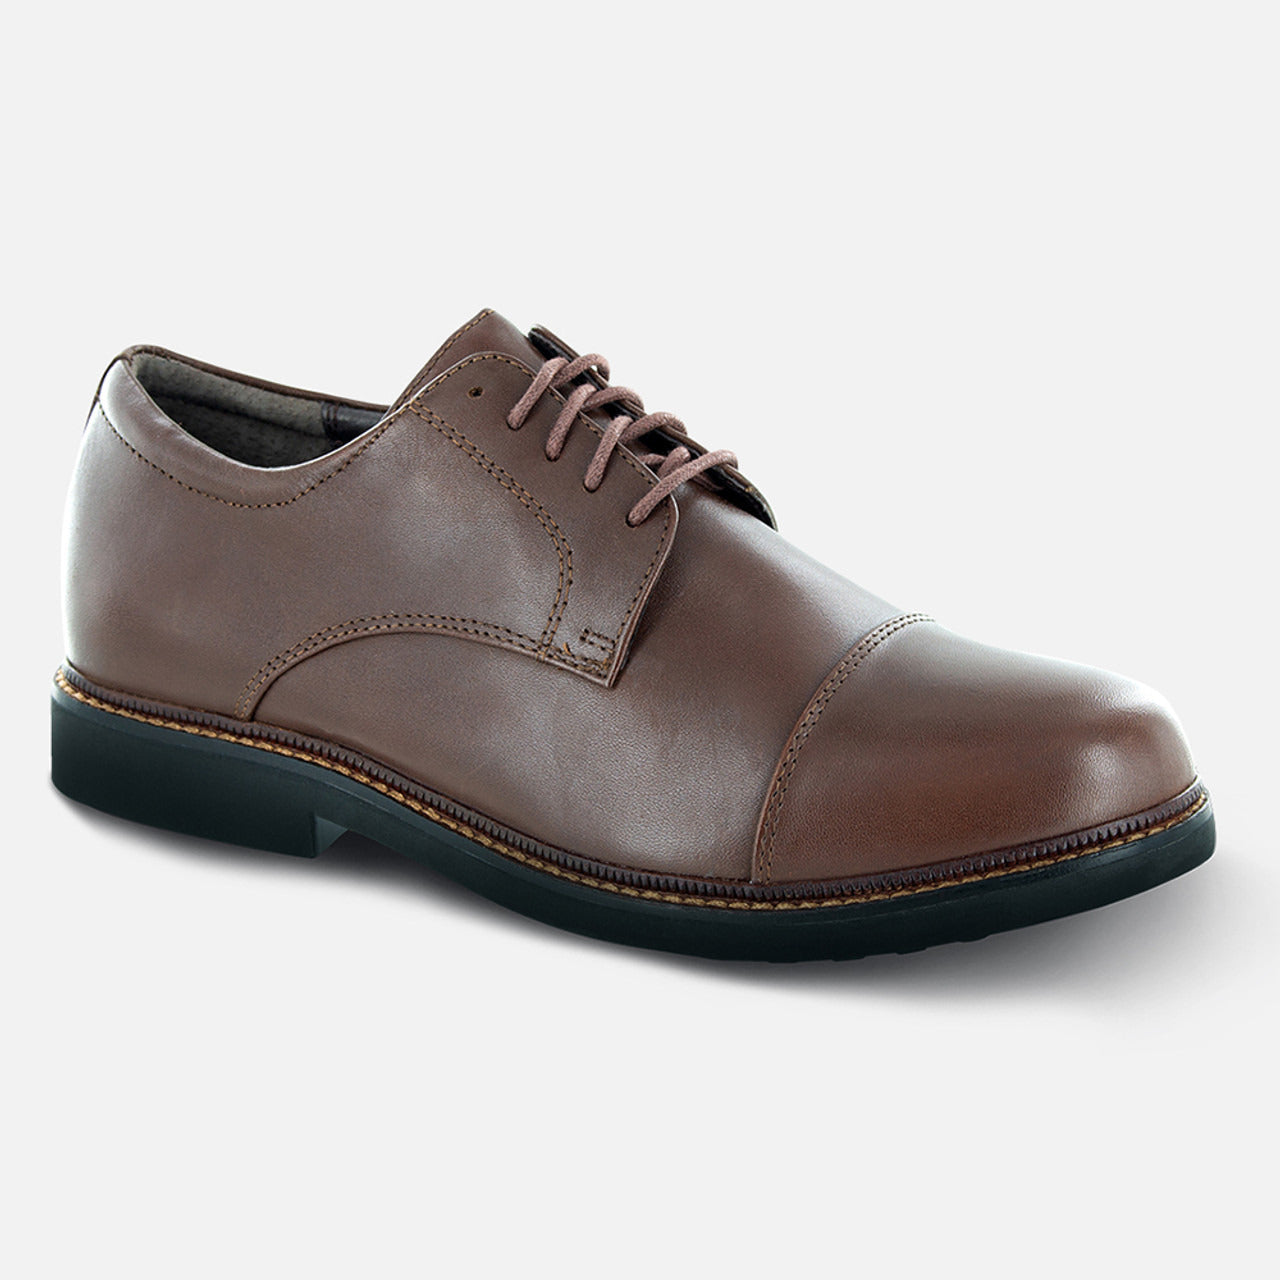 Apexfoot Men's Cap Toe Oxford Dress Shoe Lexington - Brown - Medium (D)